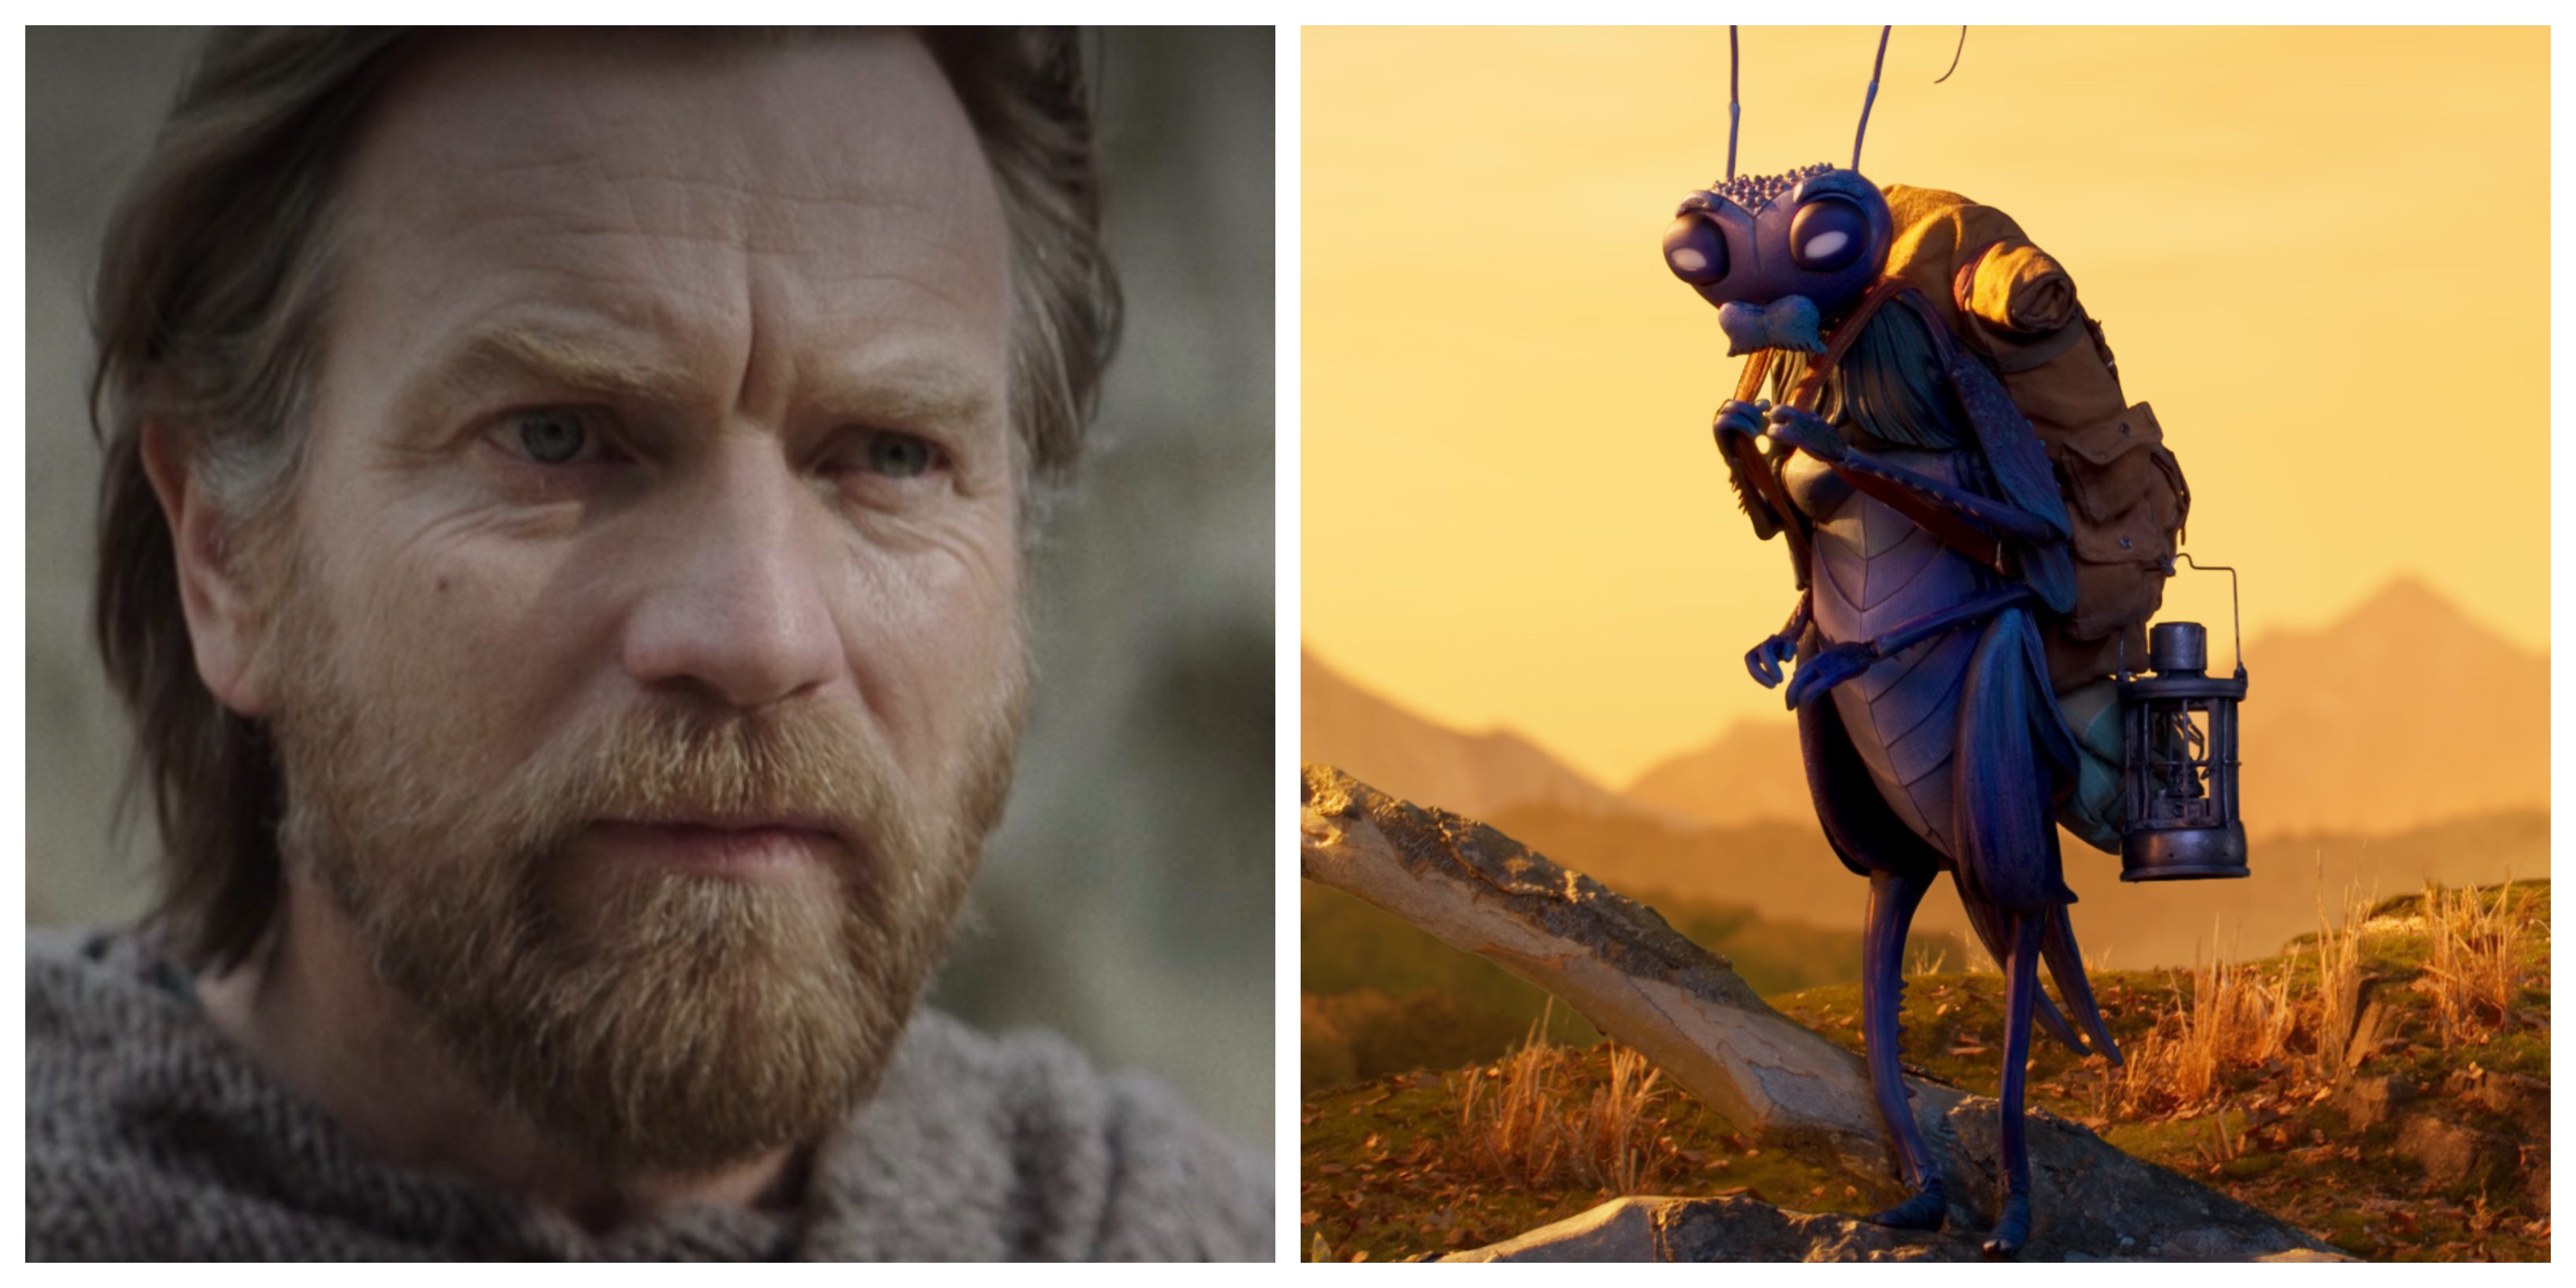 Guillermo del Toro's Pinocchio Voice Cast on Netflix - Ewan McGregor as Cricket